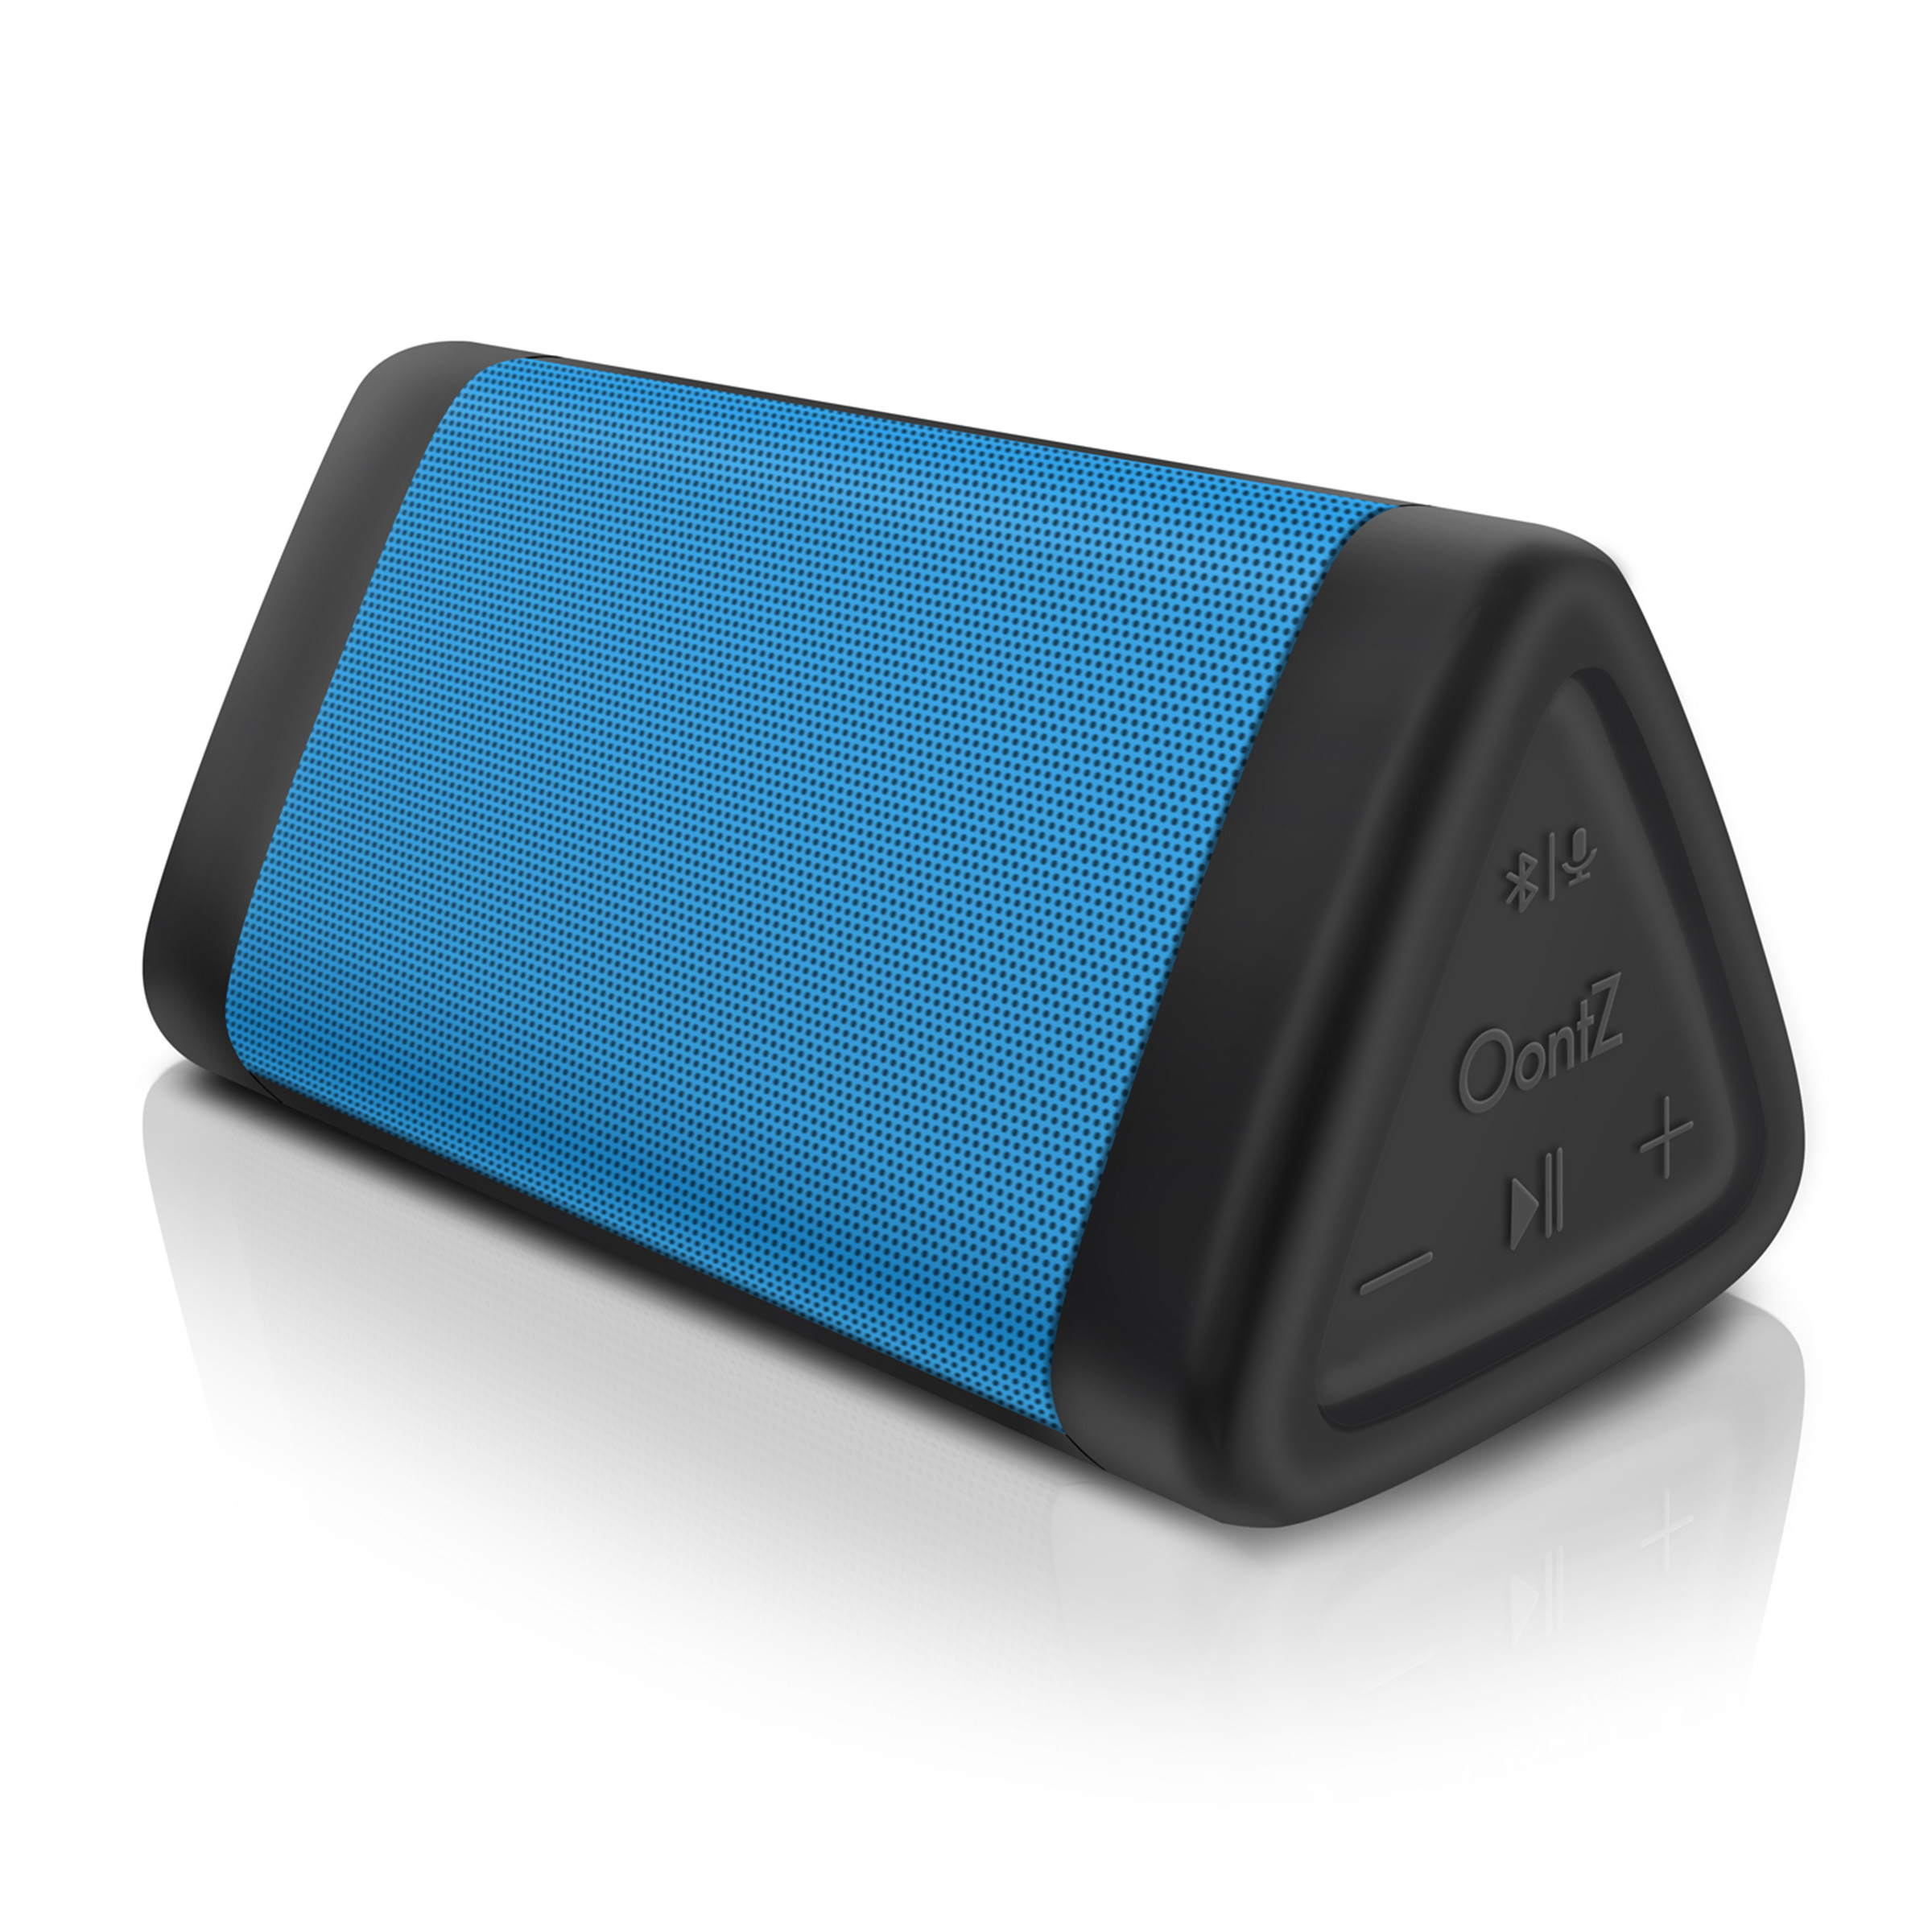 OontZ Angle 3 Enhanced Stereo Edition IPX5 Splashproof Portable Bluetooth Speaker, Volume Boost, Bass Radiator, 100' Range Bluetooth 4.2 [Blue] - image 1 of 6